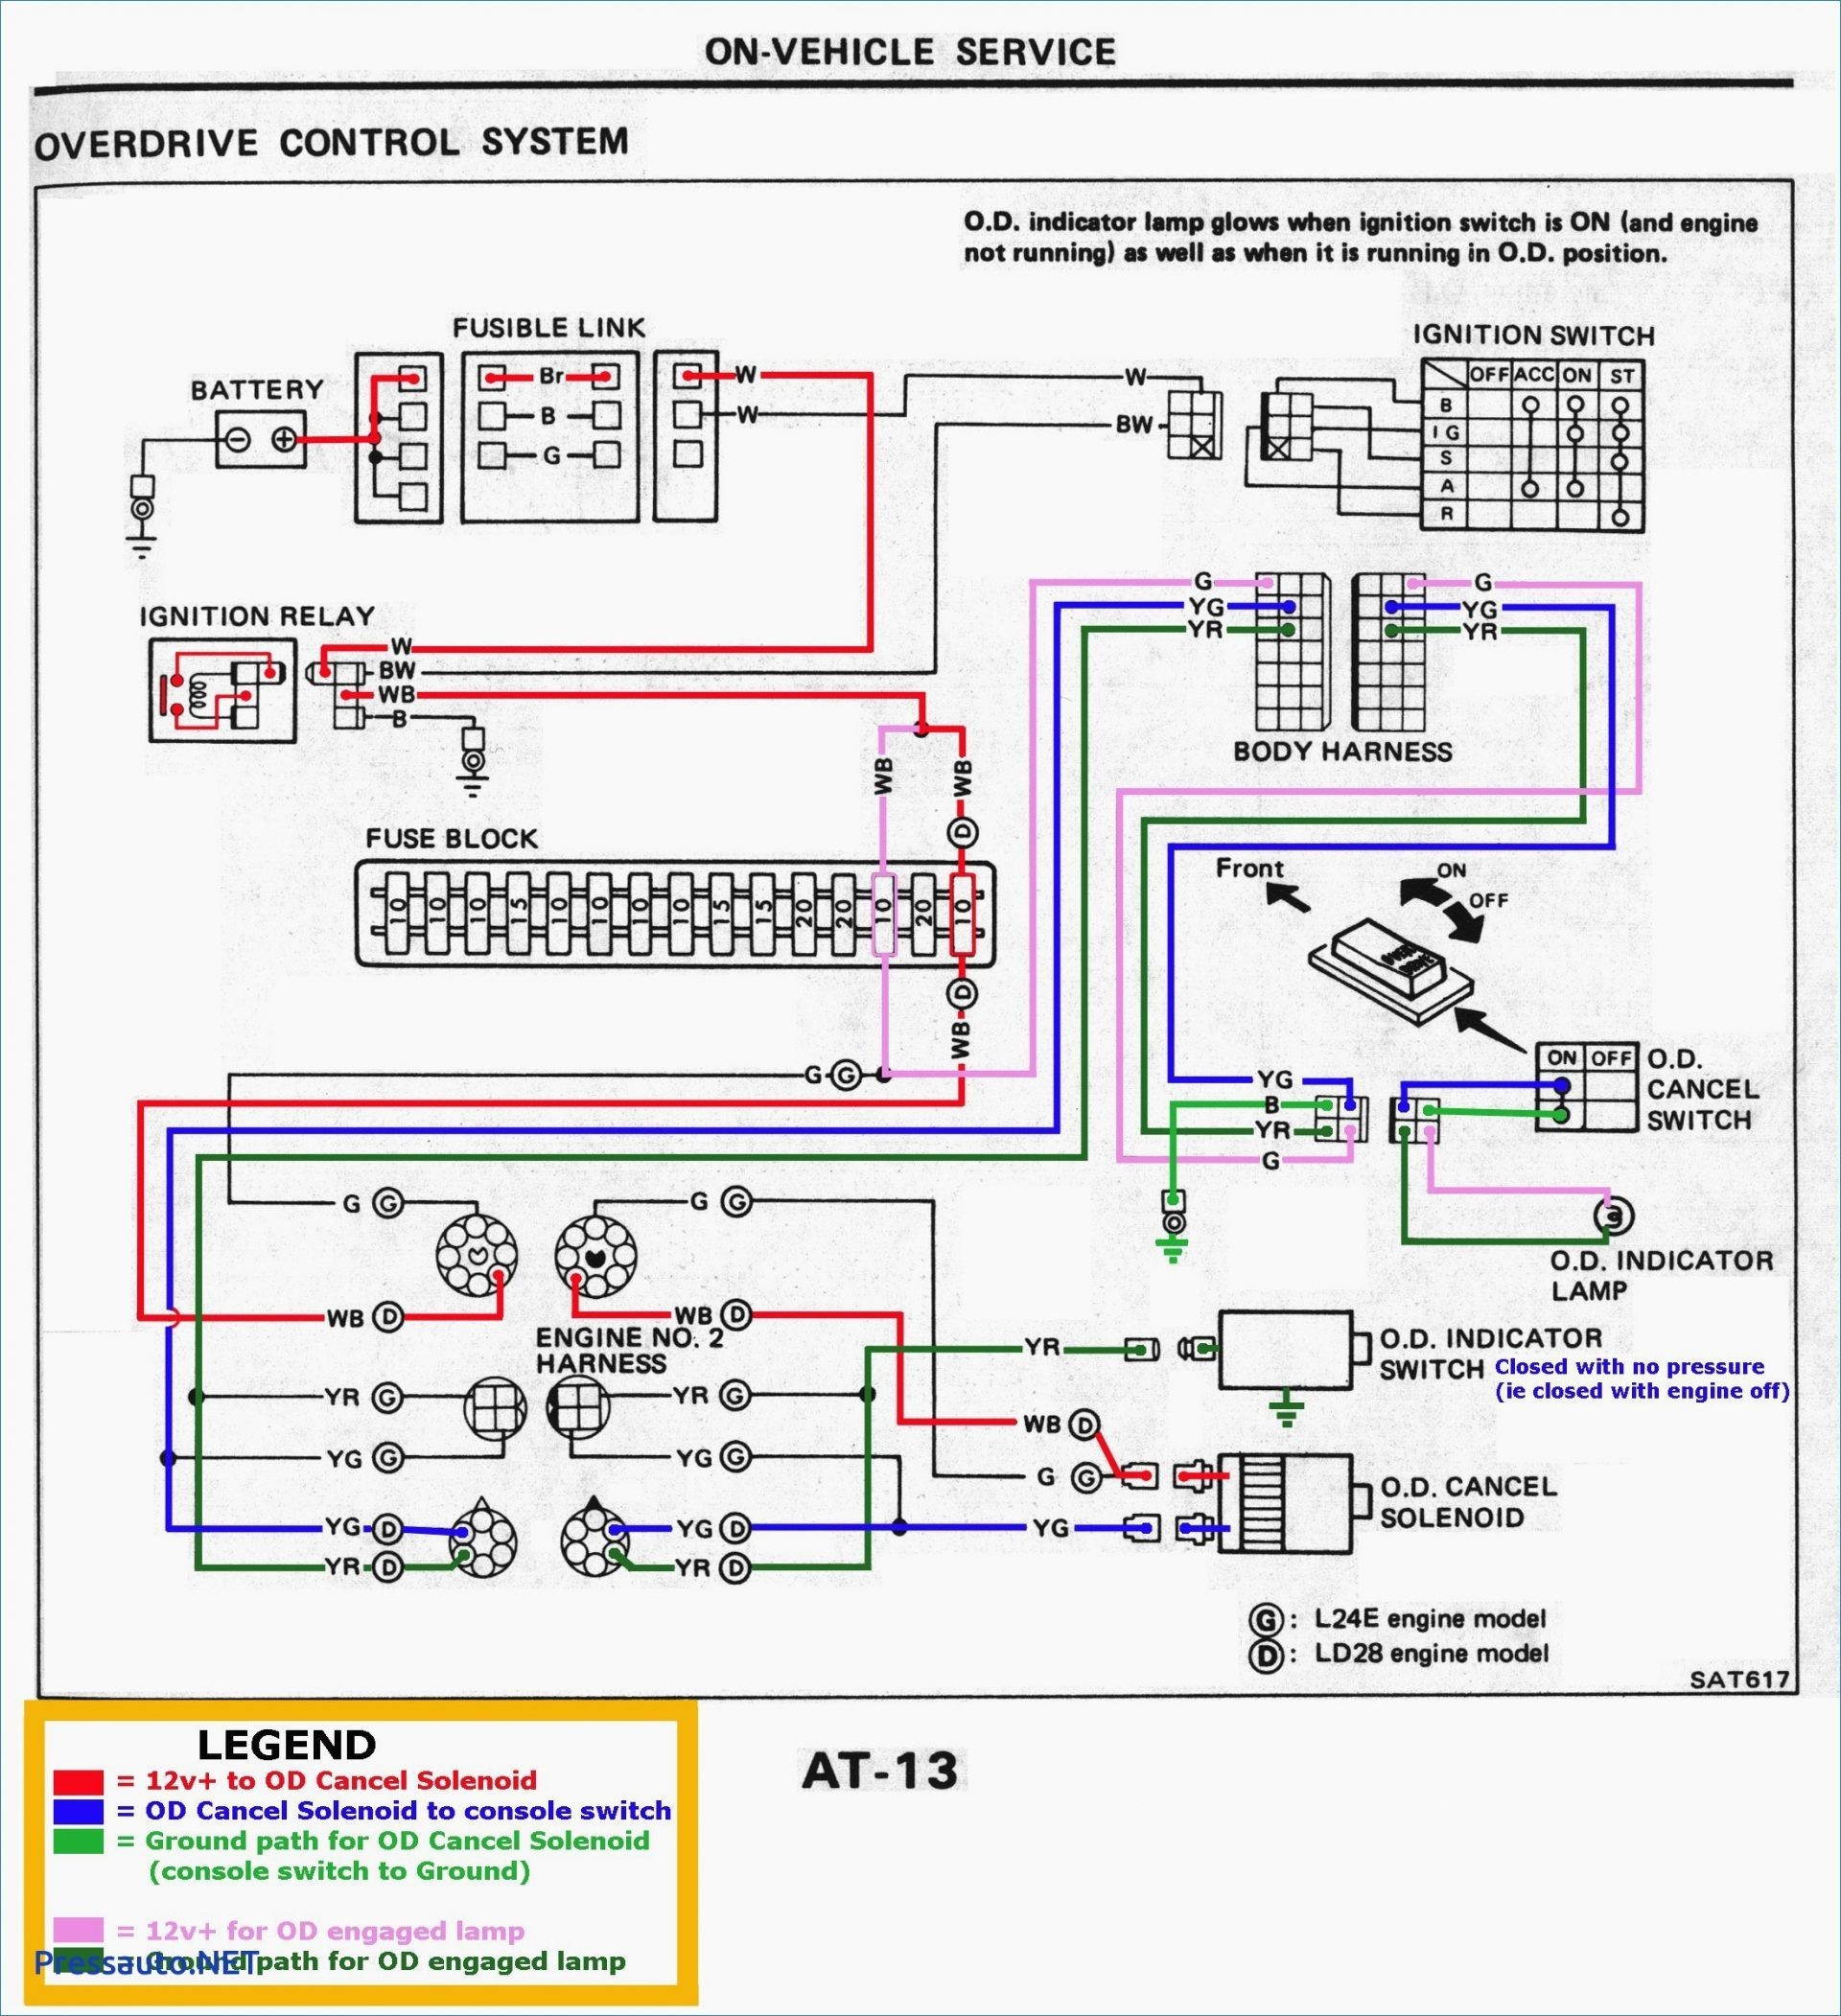 1986 Chevy Truck Wiring Diagram 1986 Chevy Truck Radio Wiring Diagram Inspirational 1994 Chevy 1500 Of 1986 Chevy Truck Wiring Diagram